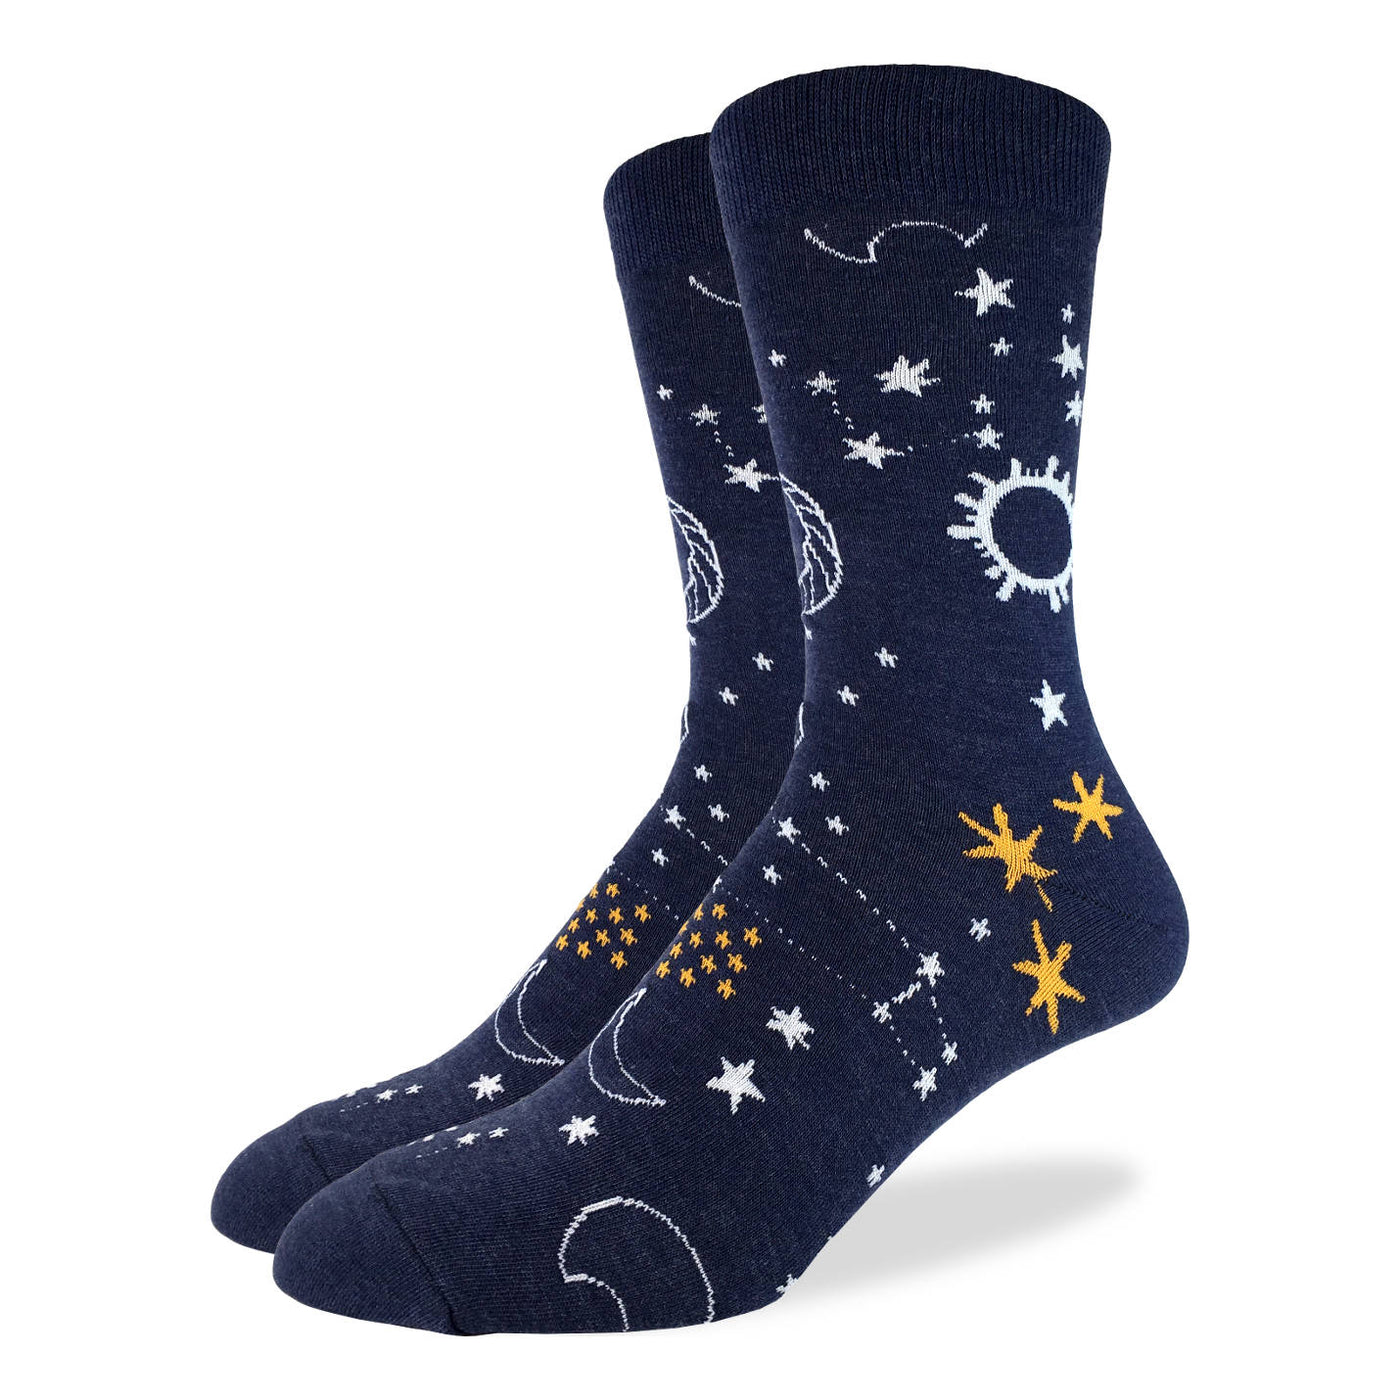 "Starry Night" Cotton Crew Socks by Good Luck Sock